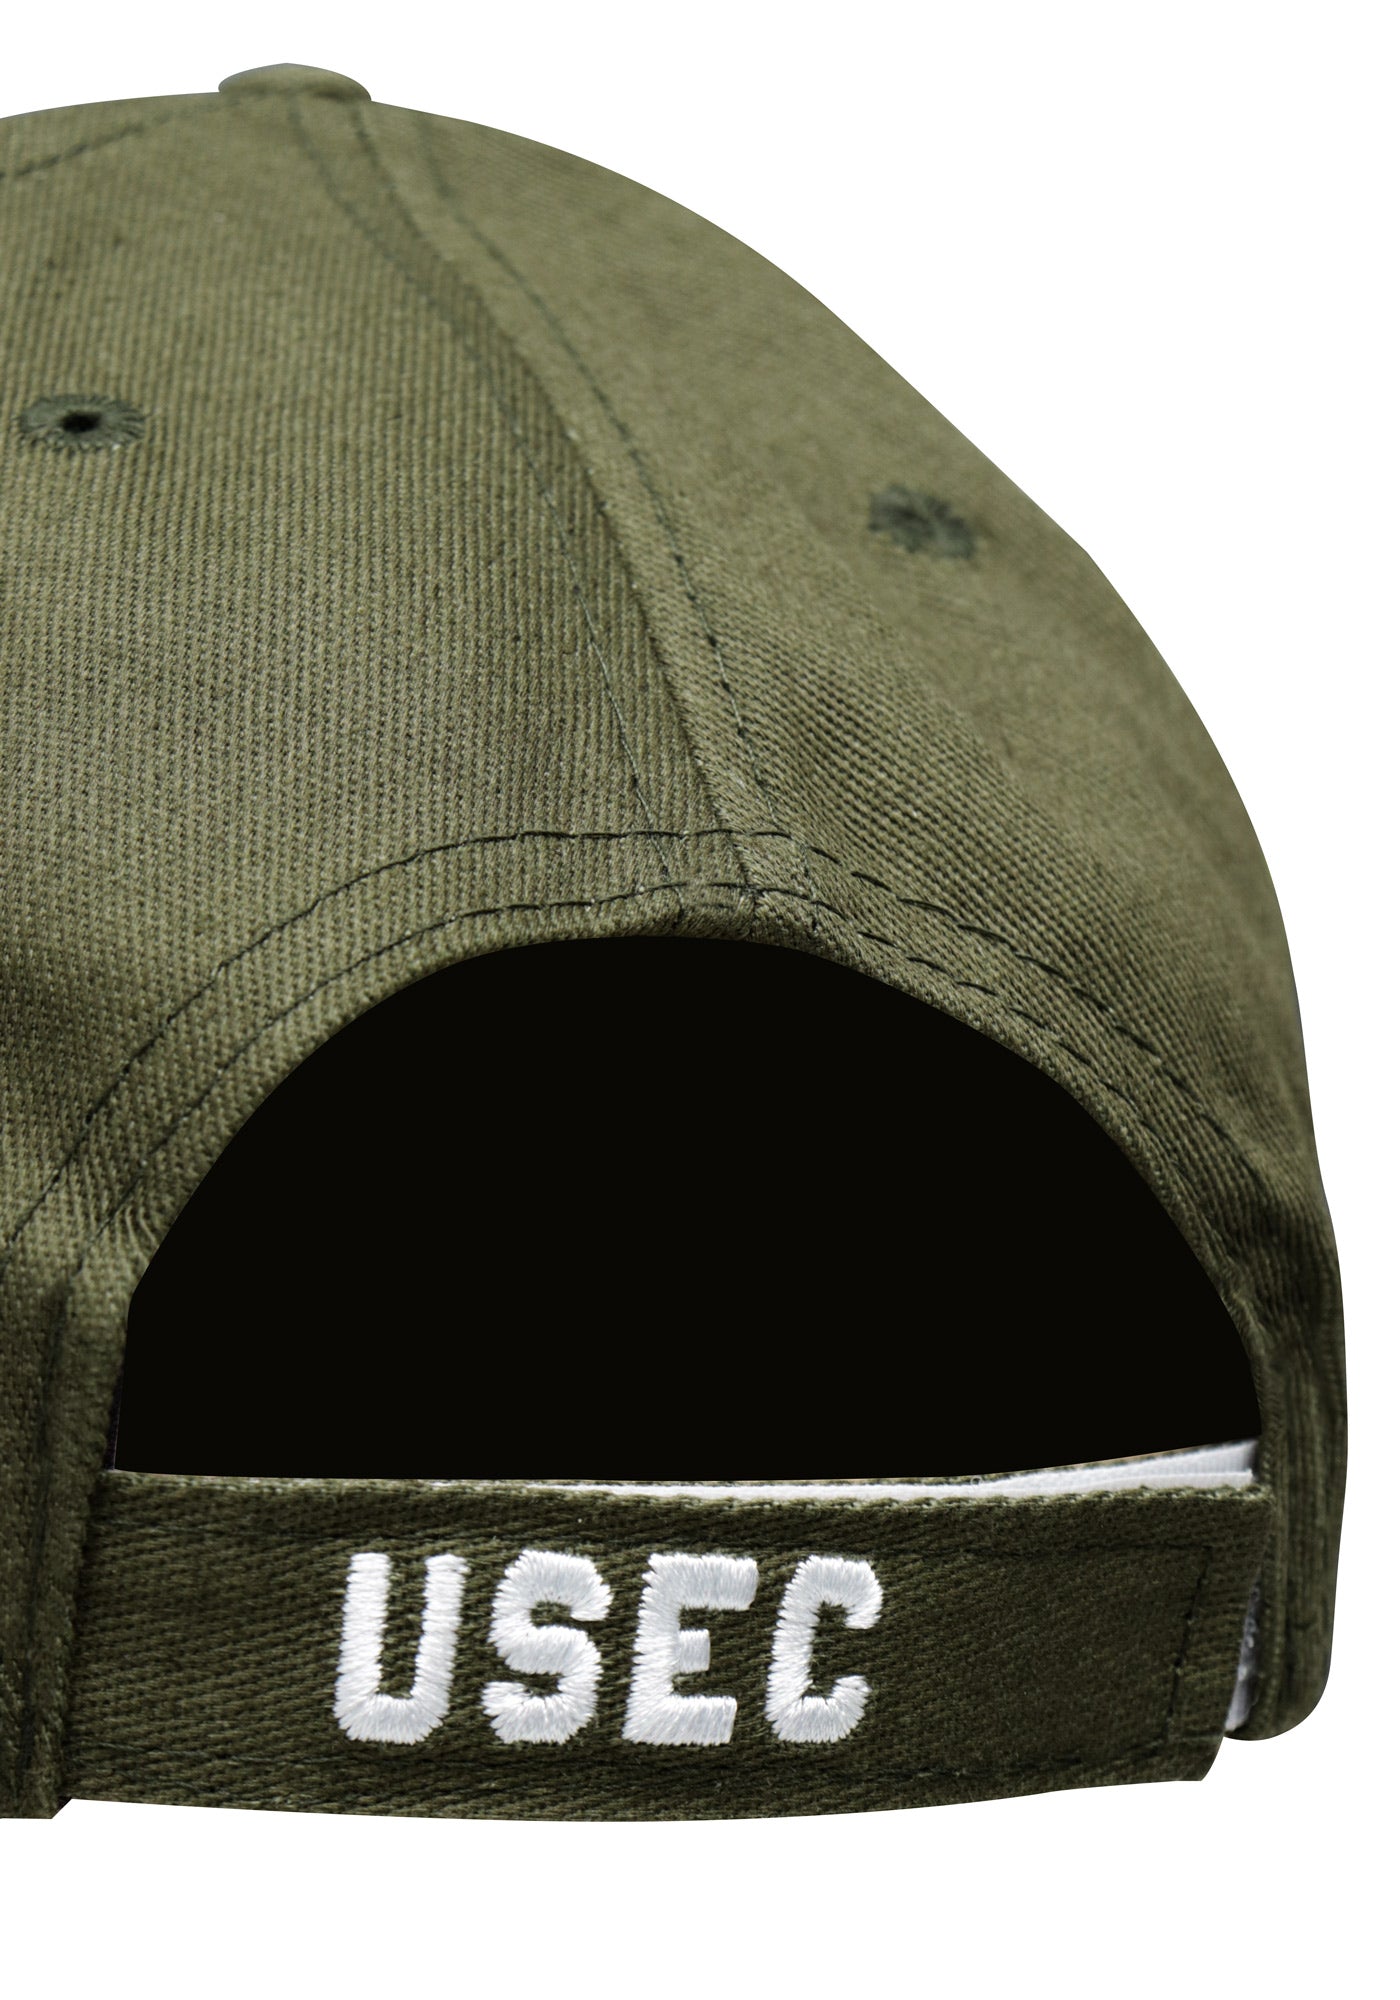 DAZCOS Escape Hat from Tarkov USEC Bear Baseball Cap Game Cosplay Accessories